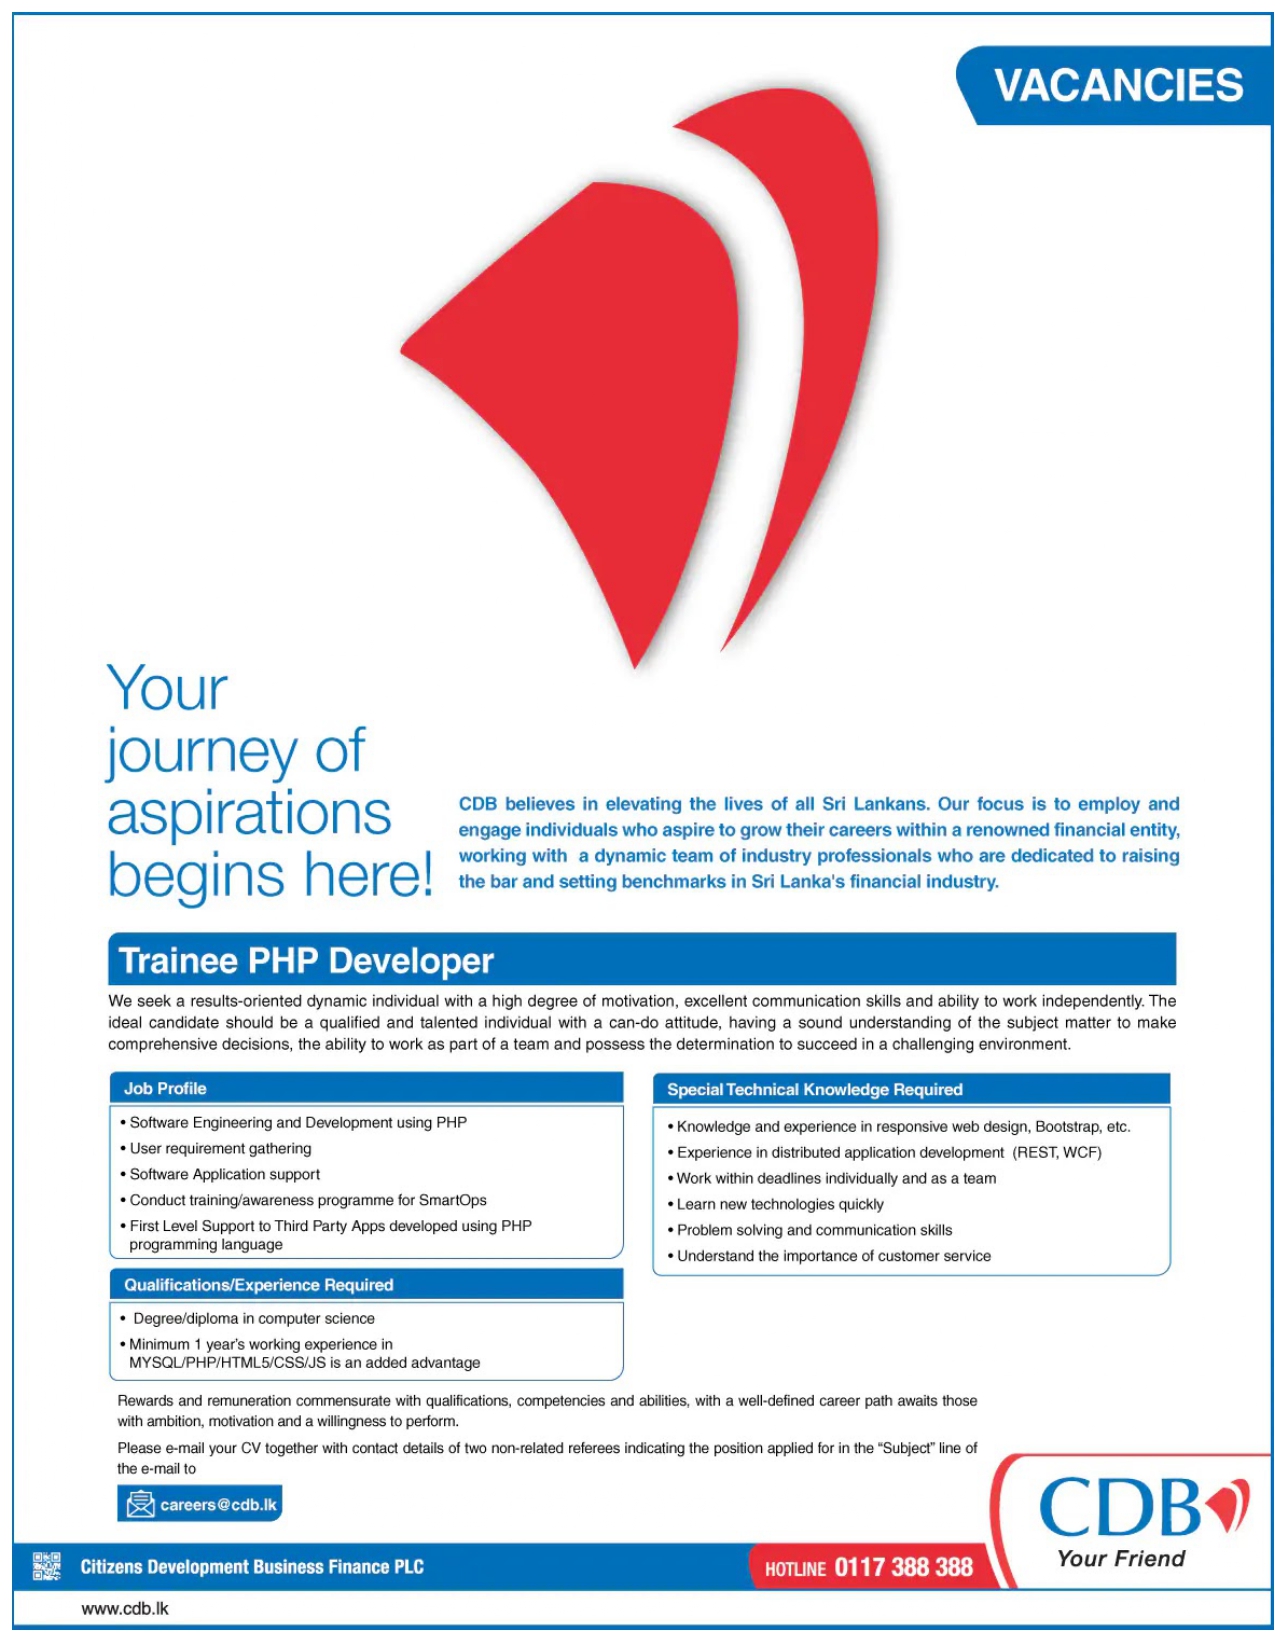 Trainee PHP Developer Vacancies - CDB Finance Jobs Vacancies Details